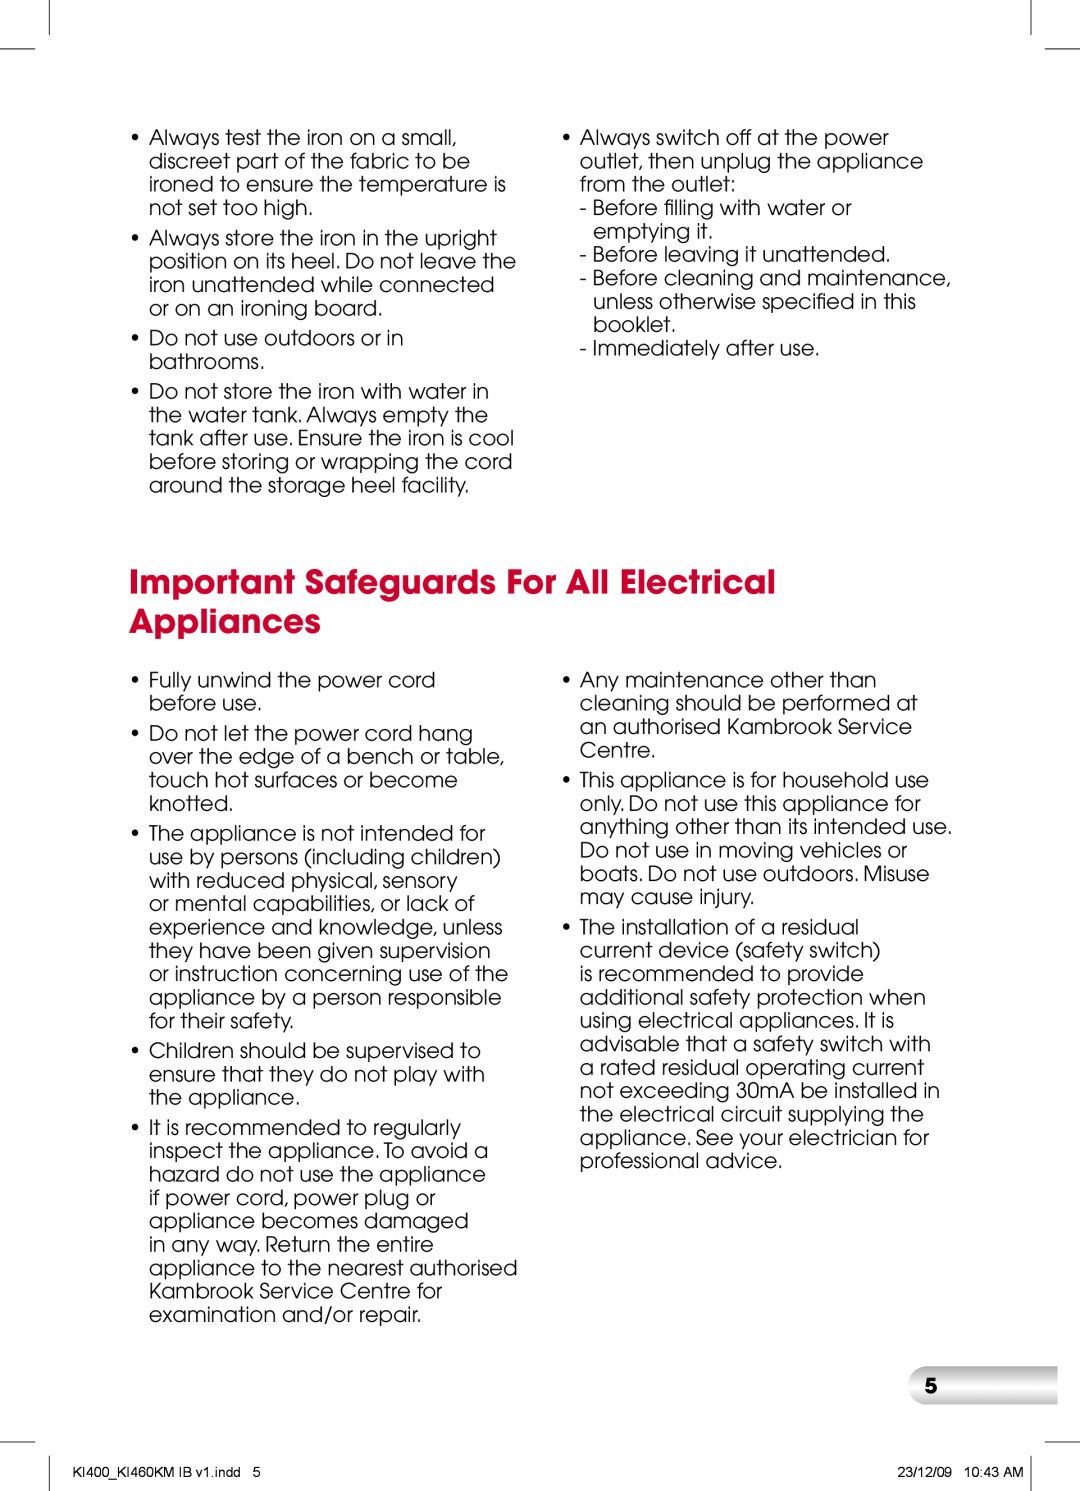 Kambrook KI400, KI460KM manual Important Safeguards For All Electrical Appliances 